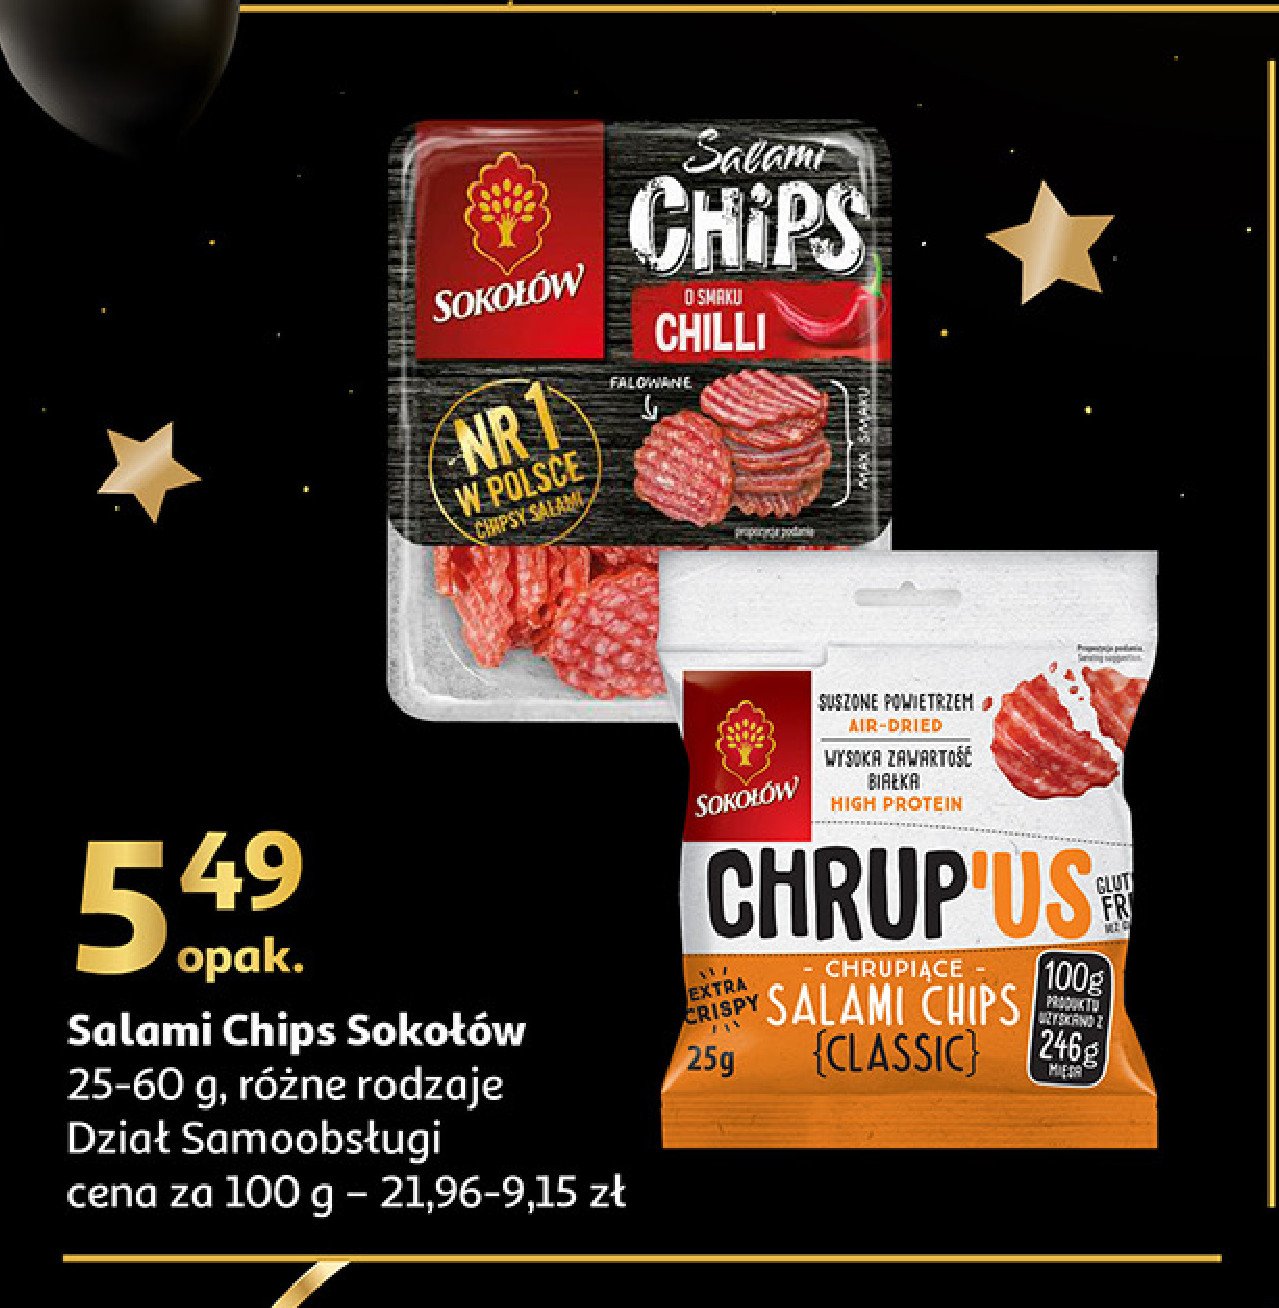 Salami chips chilli Sokołów promocja